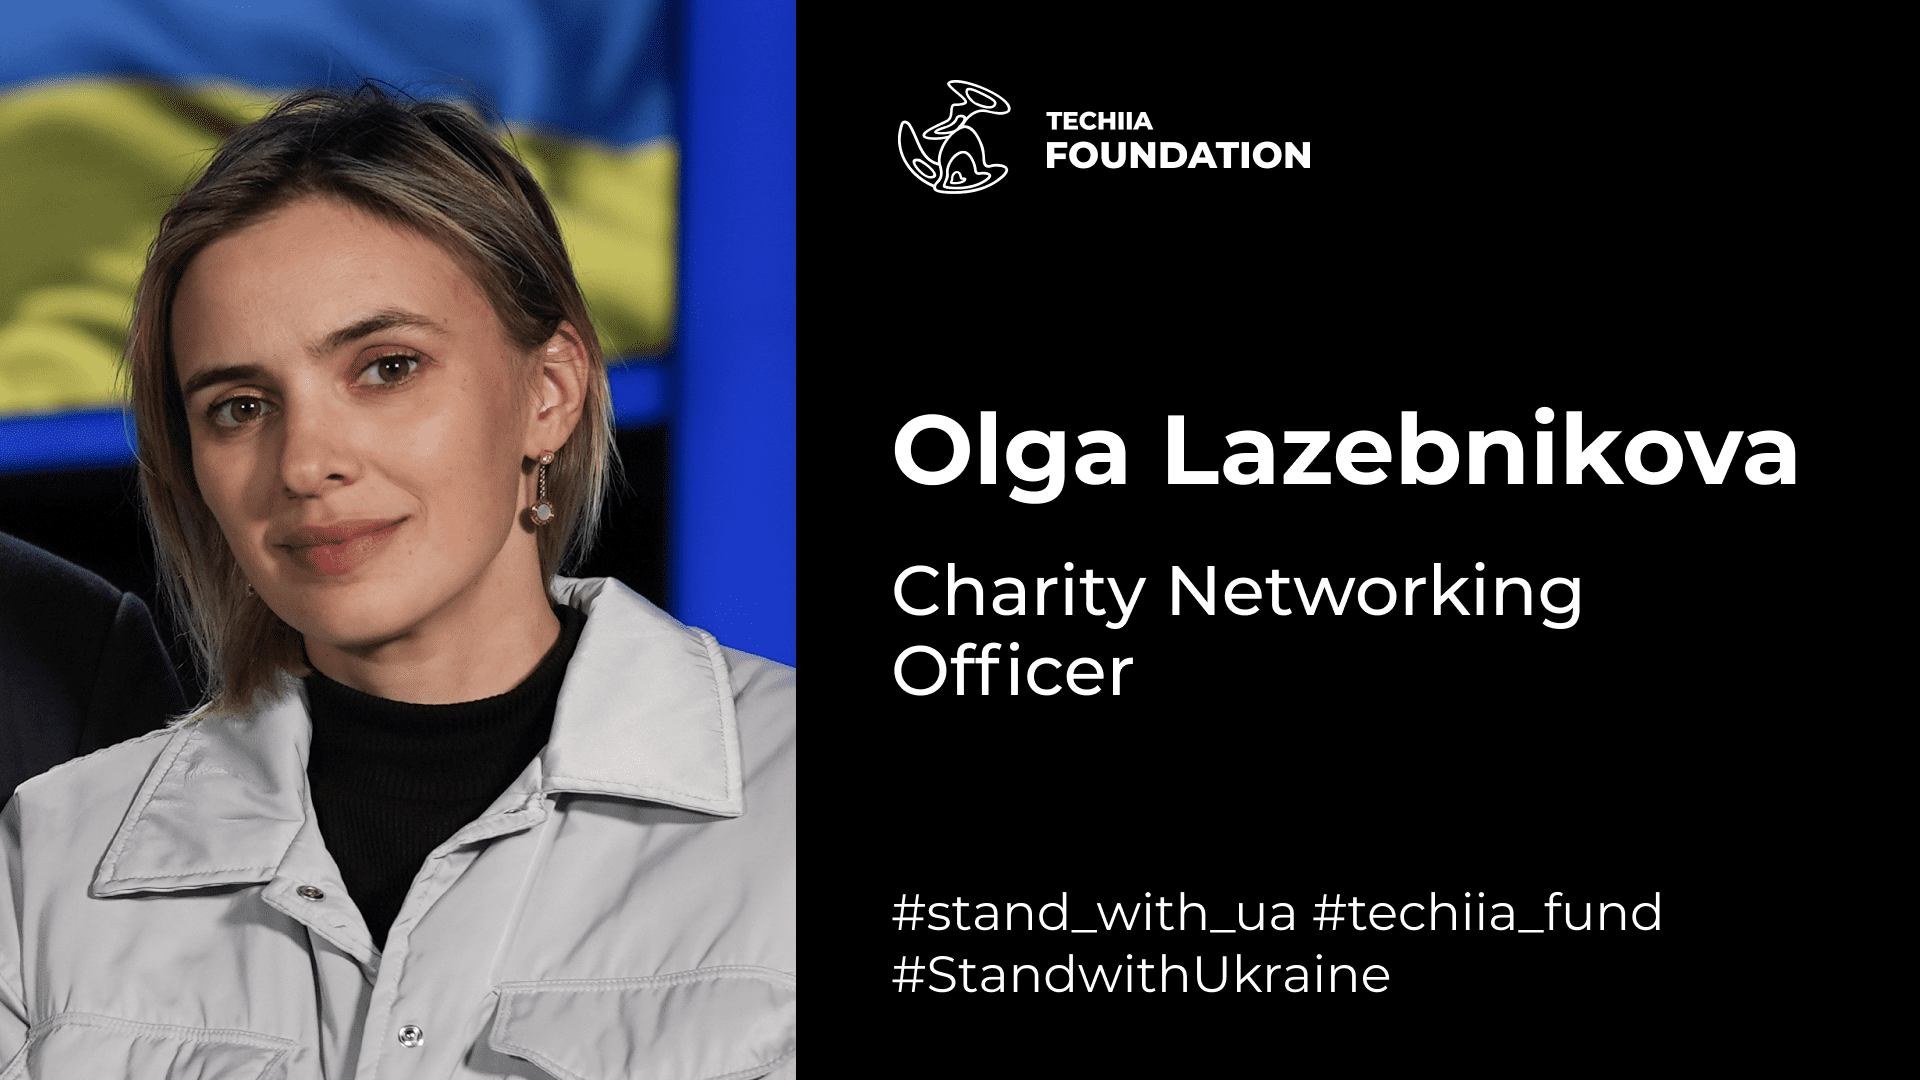 Olga Bulygina-Lazebnikova gravou um apelo pela iniciativa #StandwithUkraine